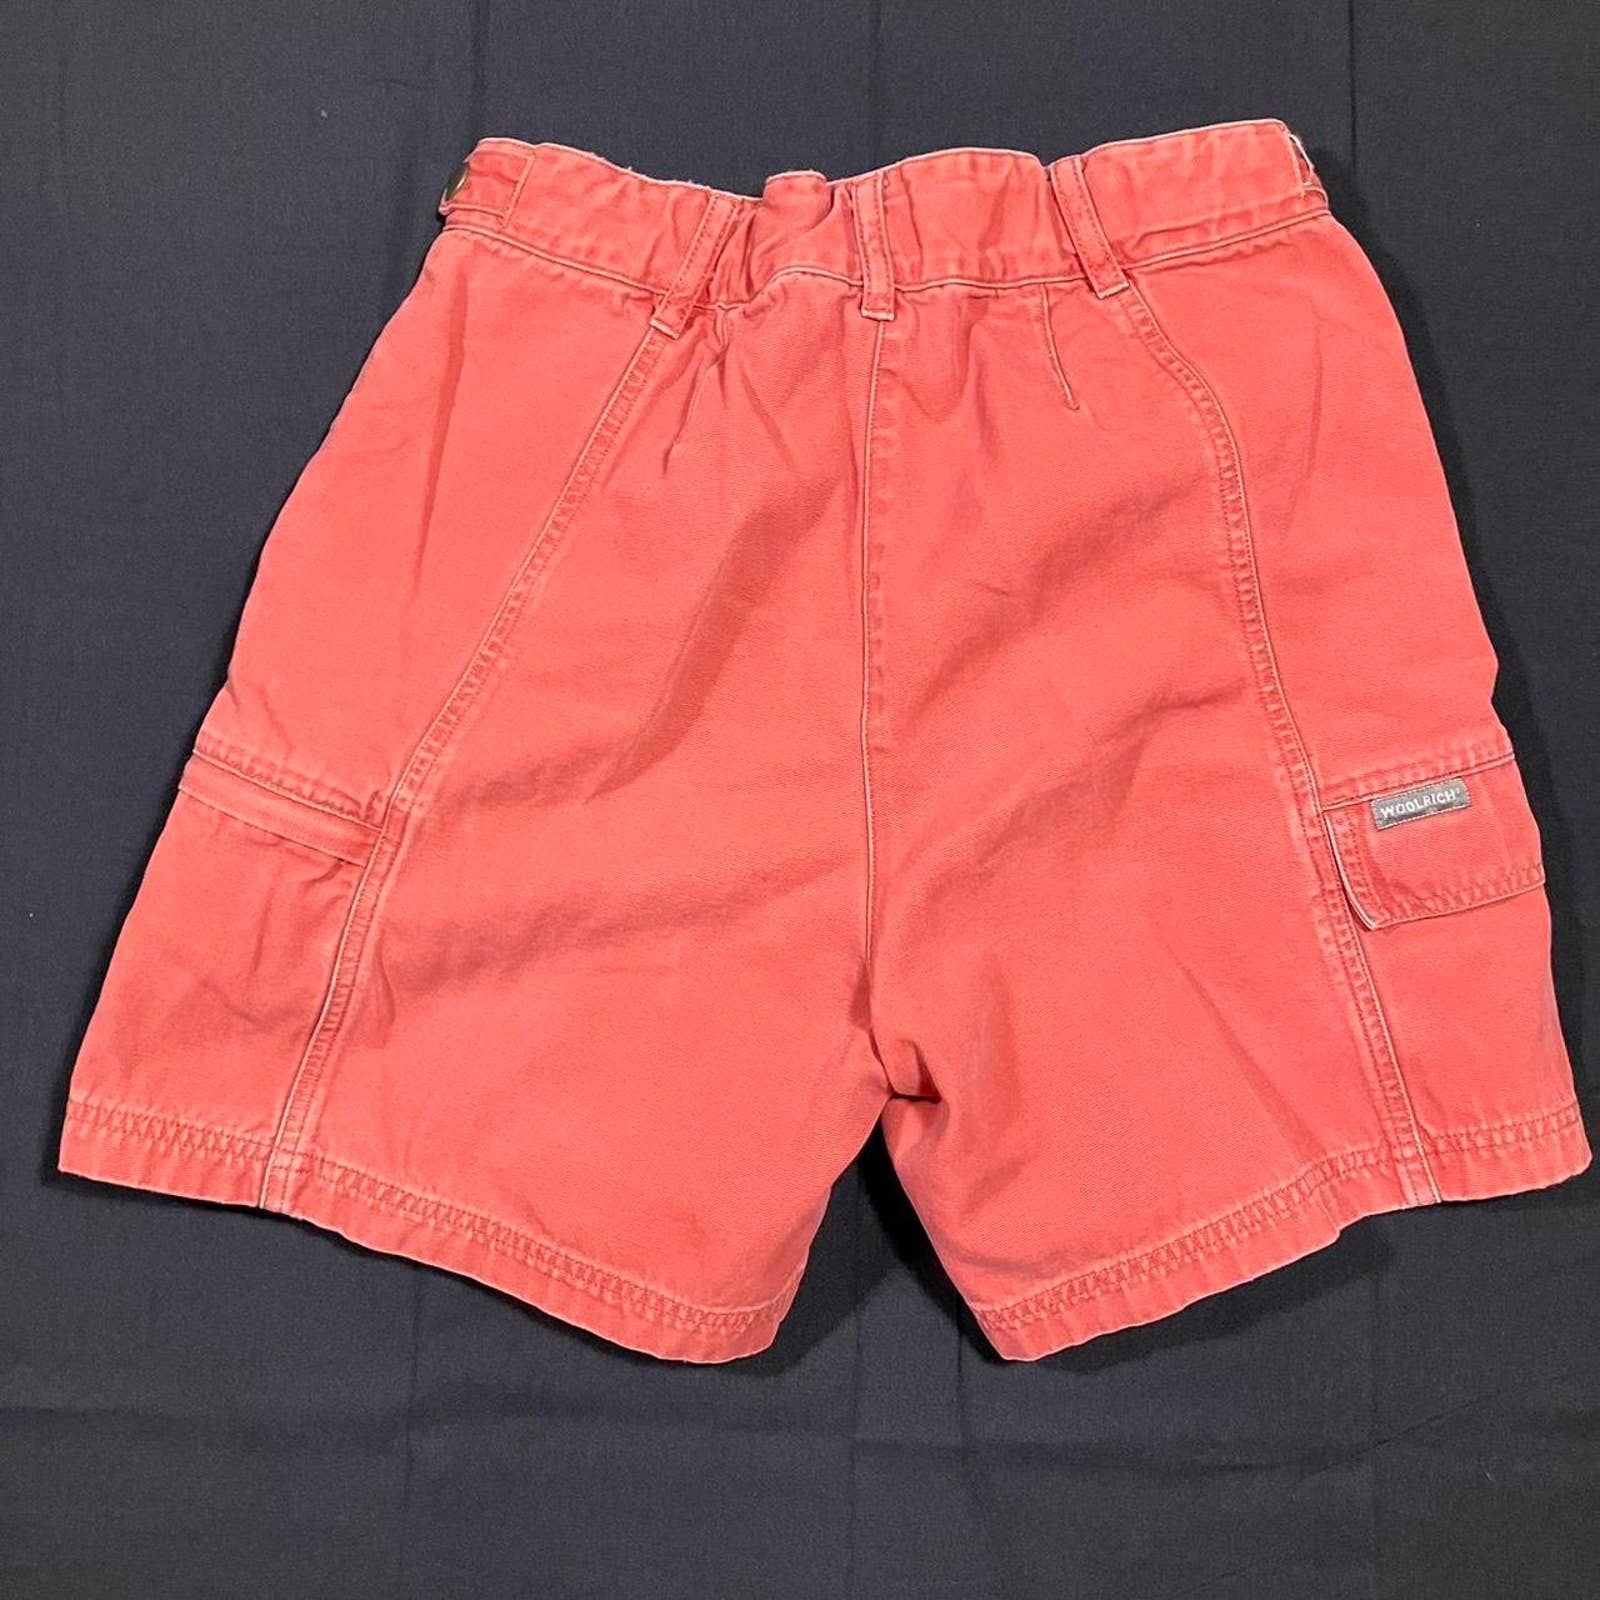 Woolrich Woolen Mills Woolrich Red Orange Canvas Cargo Shorts Size 30" / US 8 / IT 44 - 5 Preview